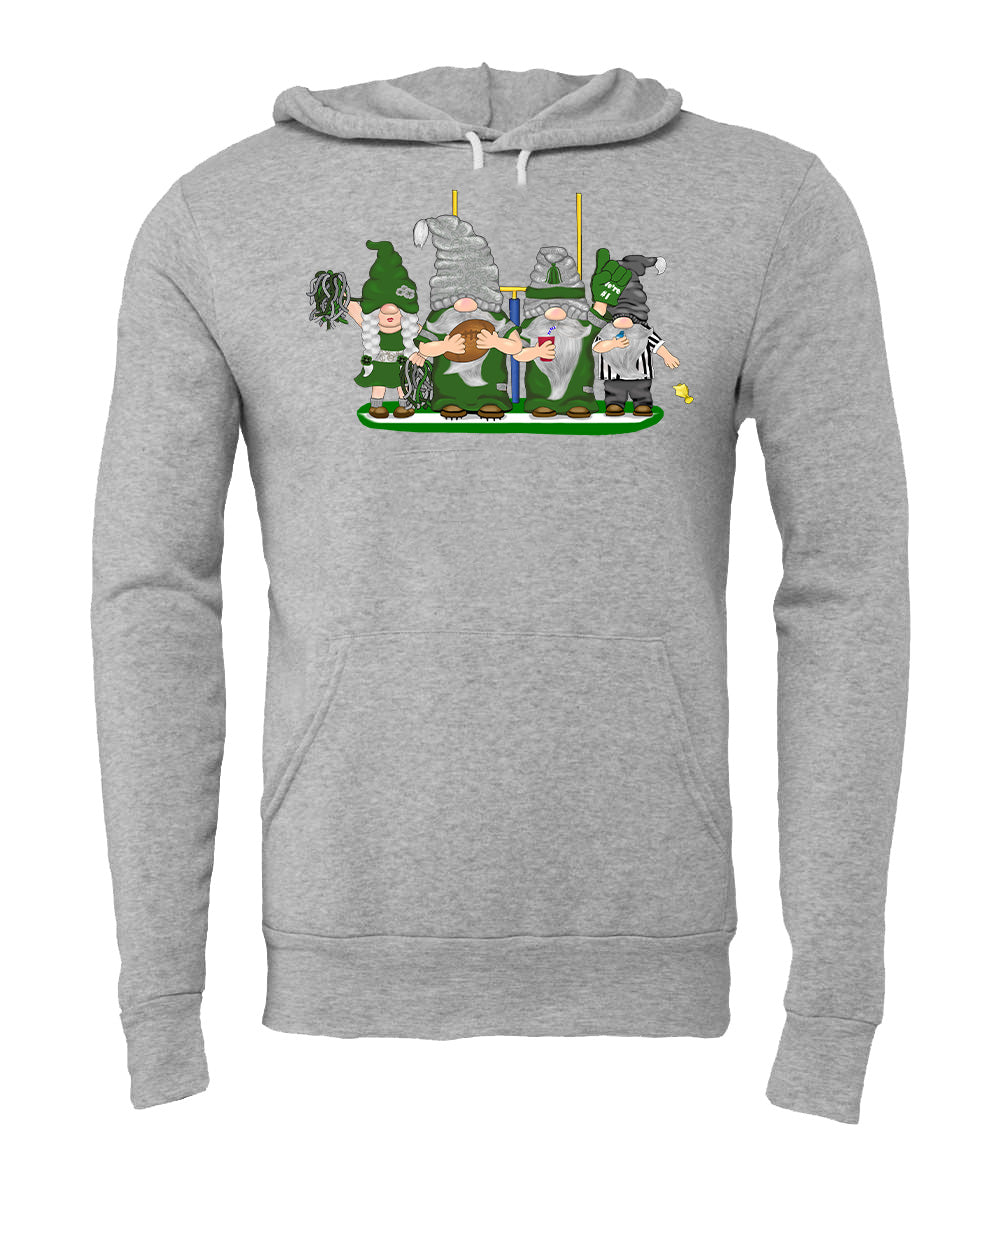 Green & Silver Football Gnomes (similar to Philadelphia) on Unisex Hoodie